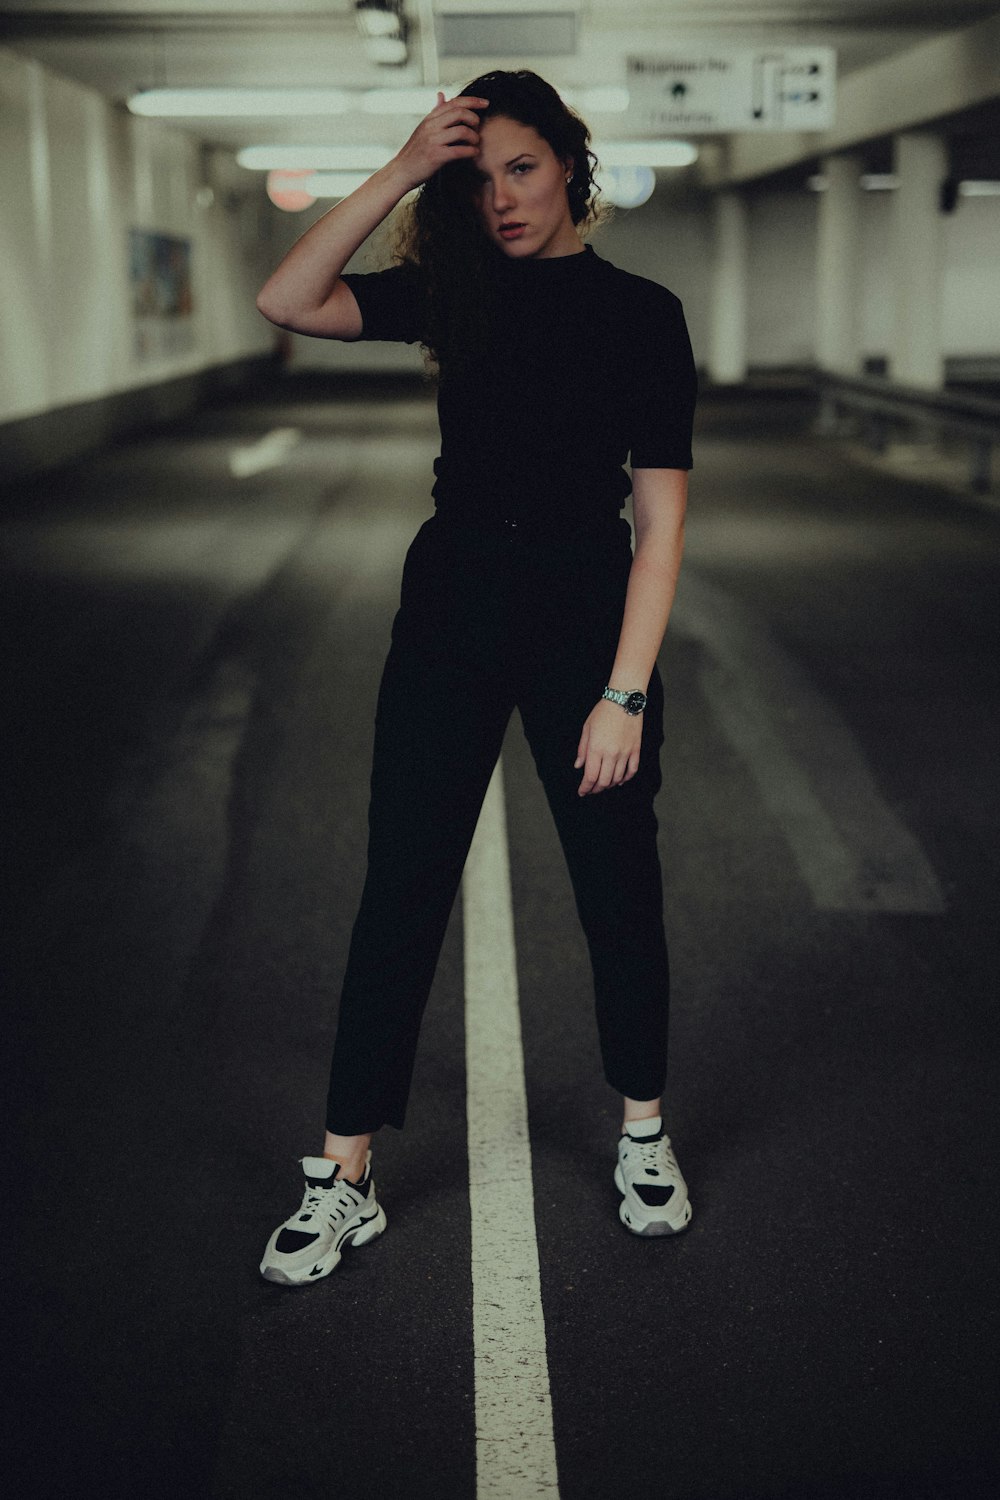 Woman in black shirt and pants wearing white nike sneakers photo – Free  Heidenheim an der brenz Image on Unsplash